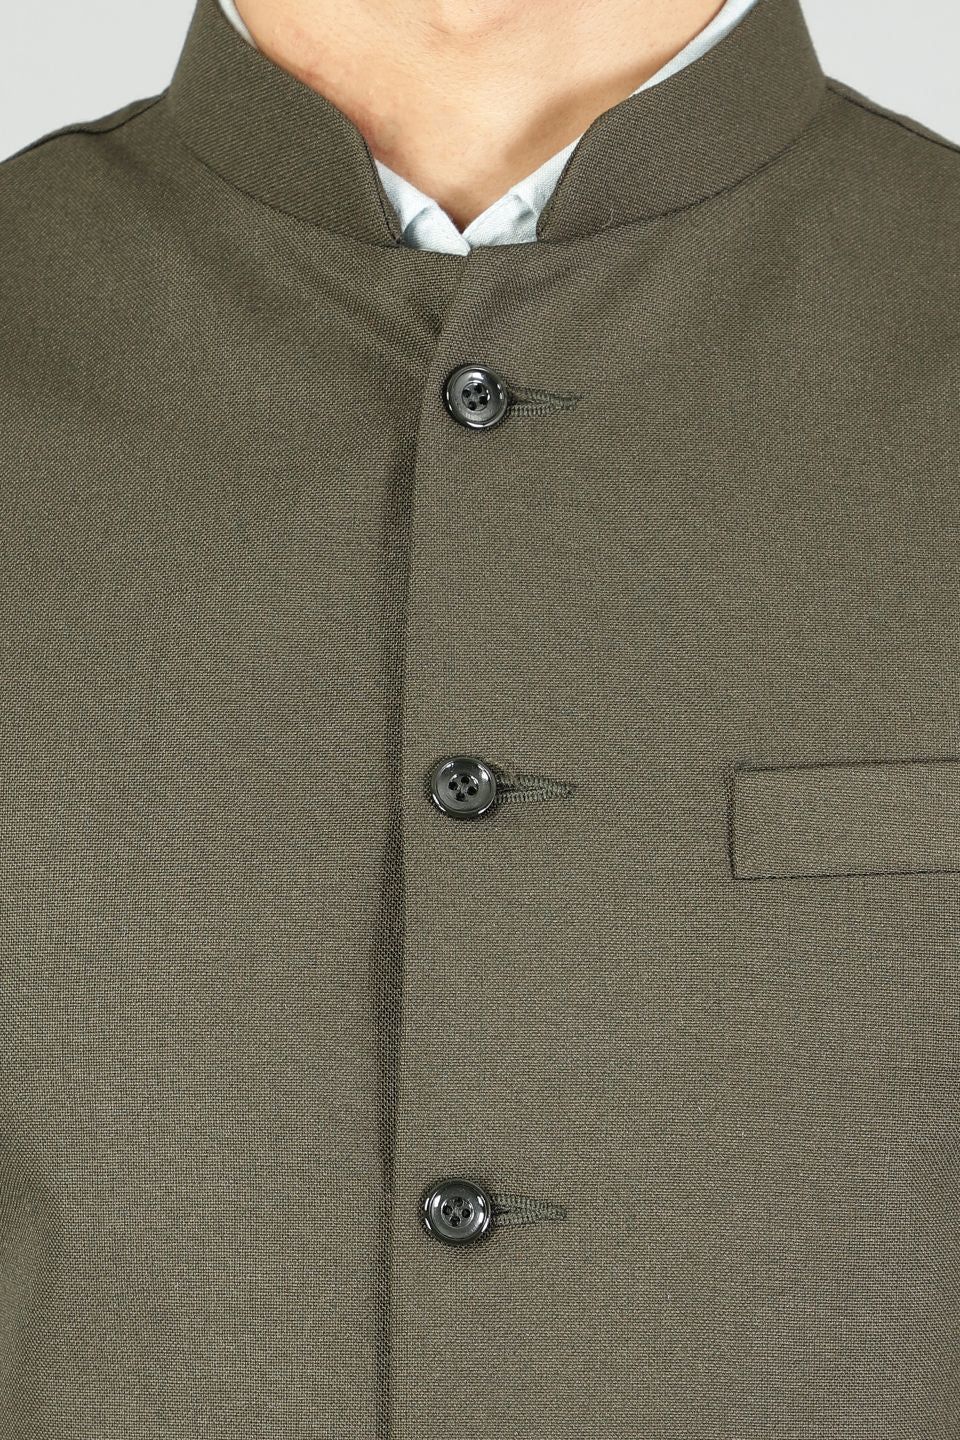 Polyester Cotton Plain Green  Vest and Trouser Set